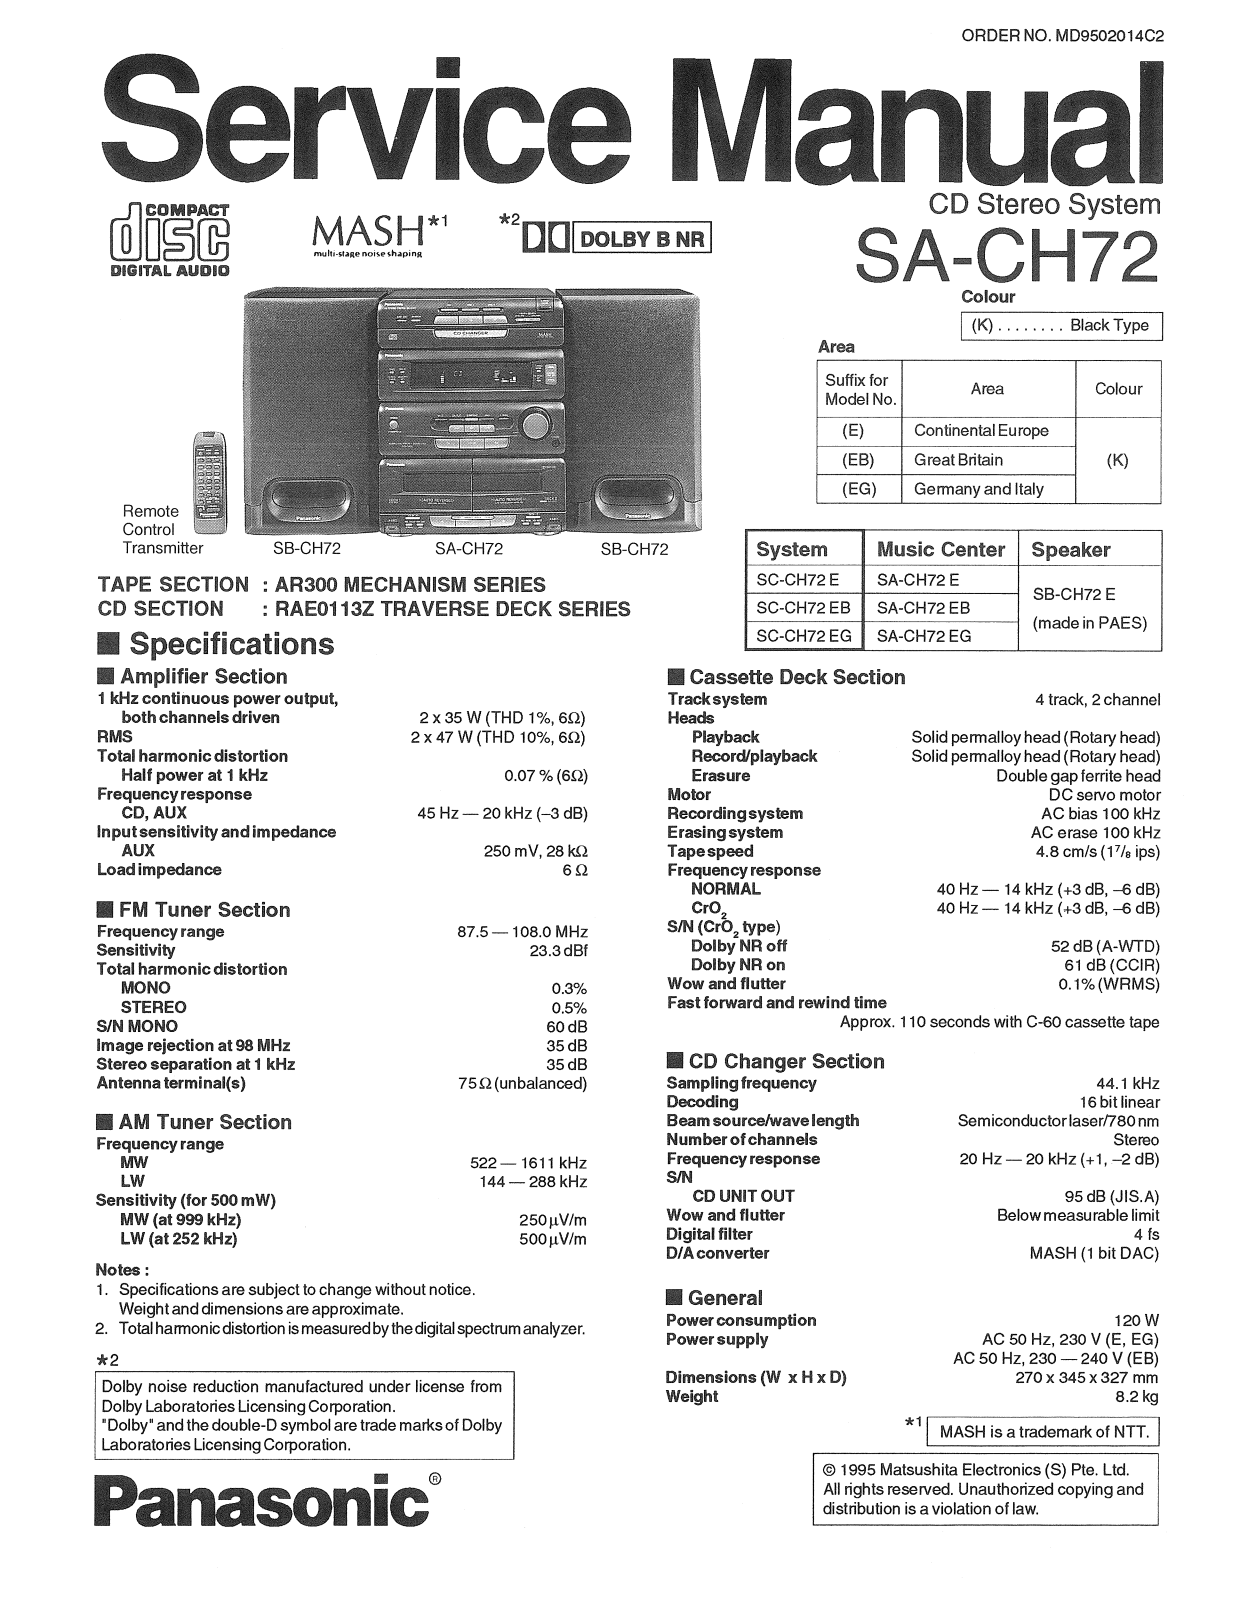 Panasonic SACH-72 Service manual